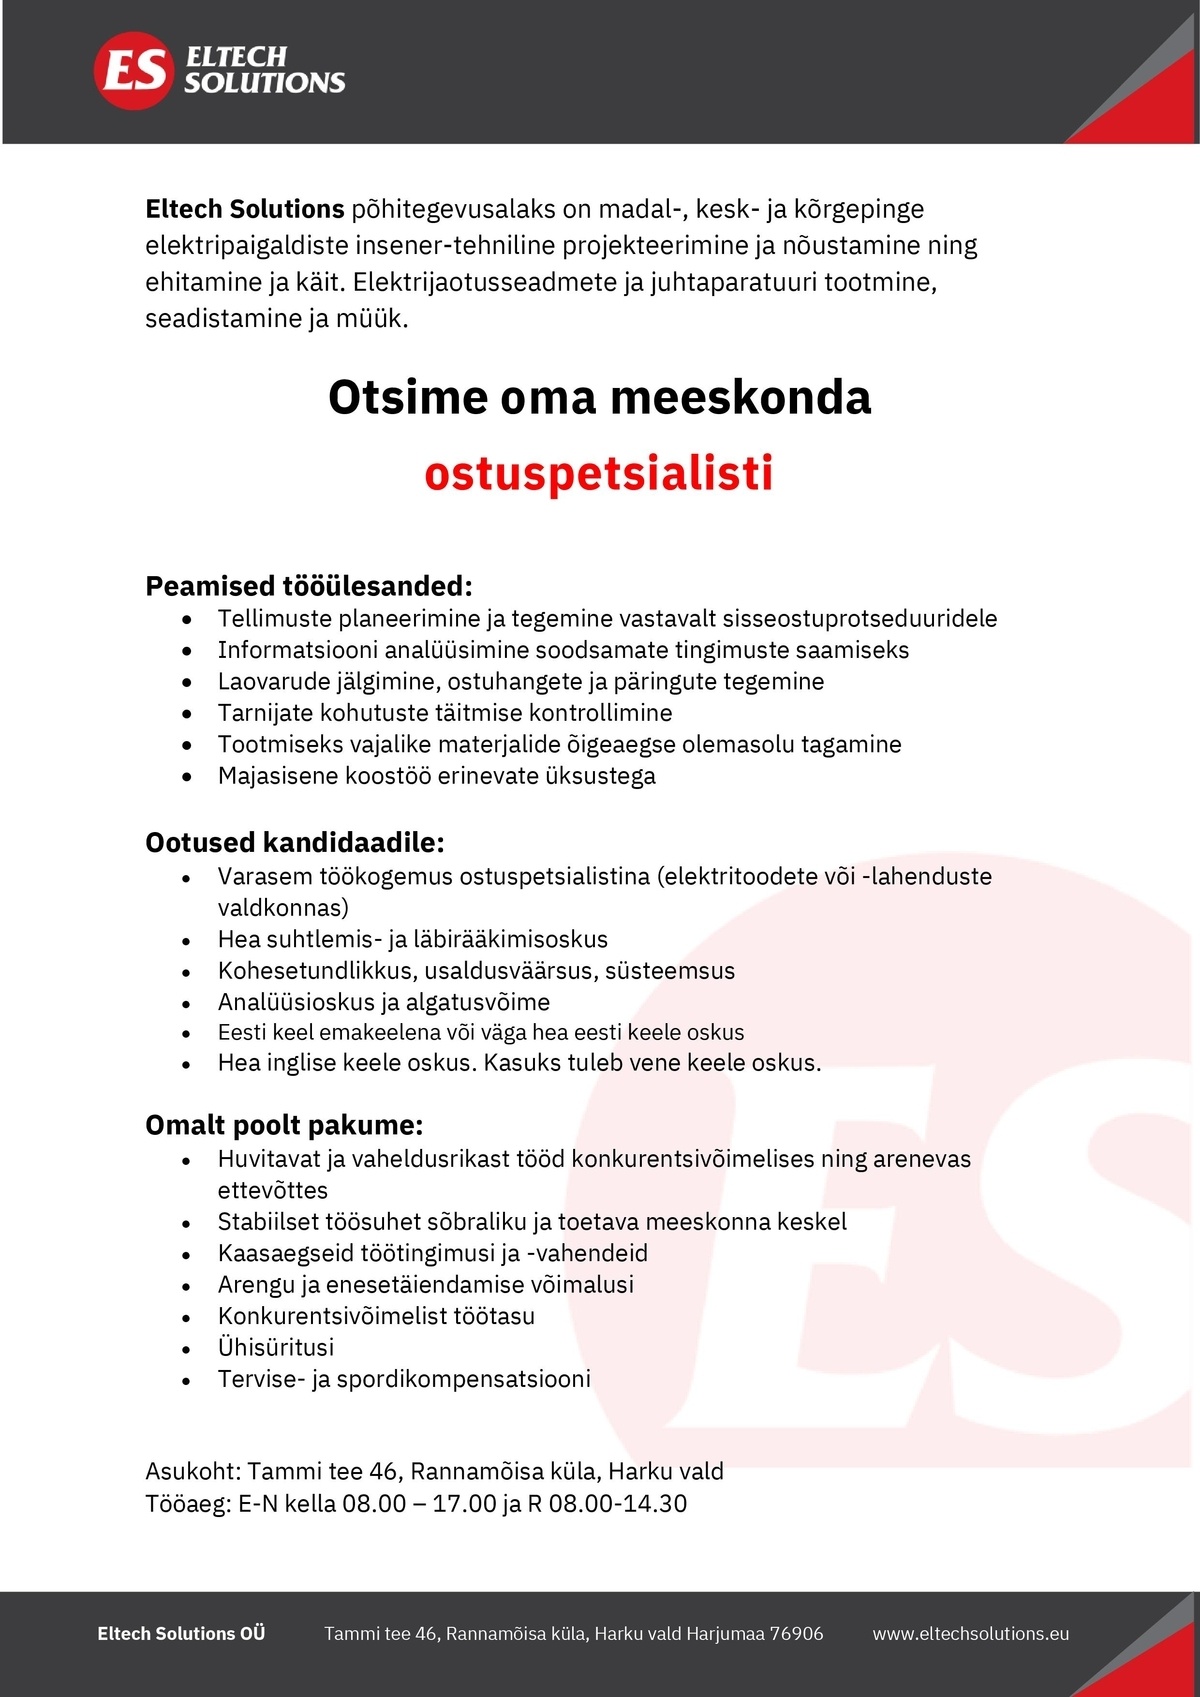 Eltech Solutions OÜ Ostuspetsialist